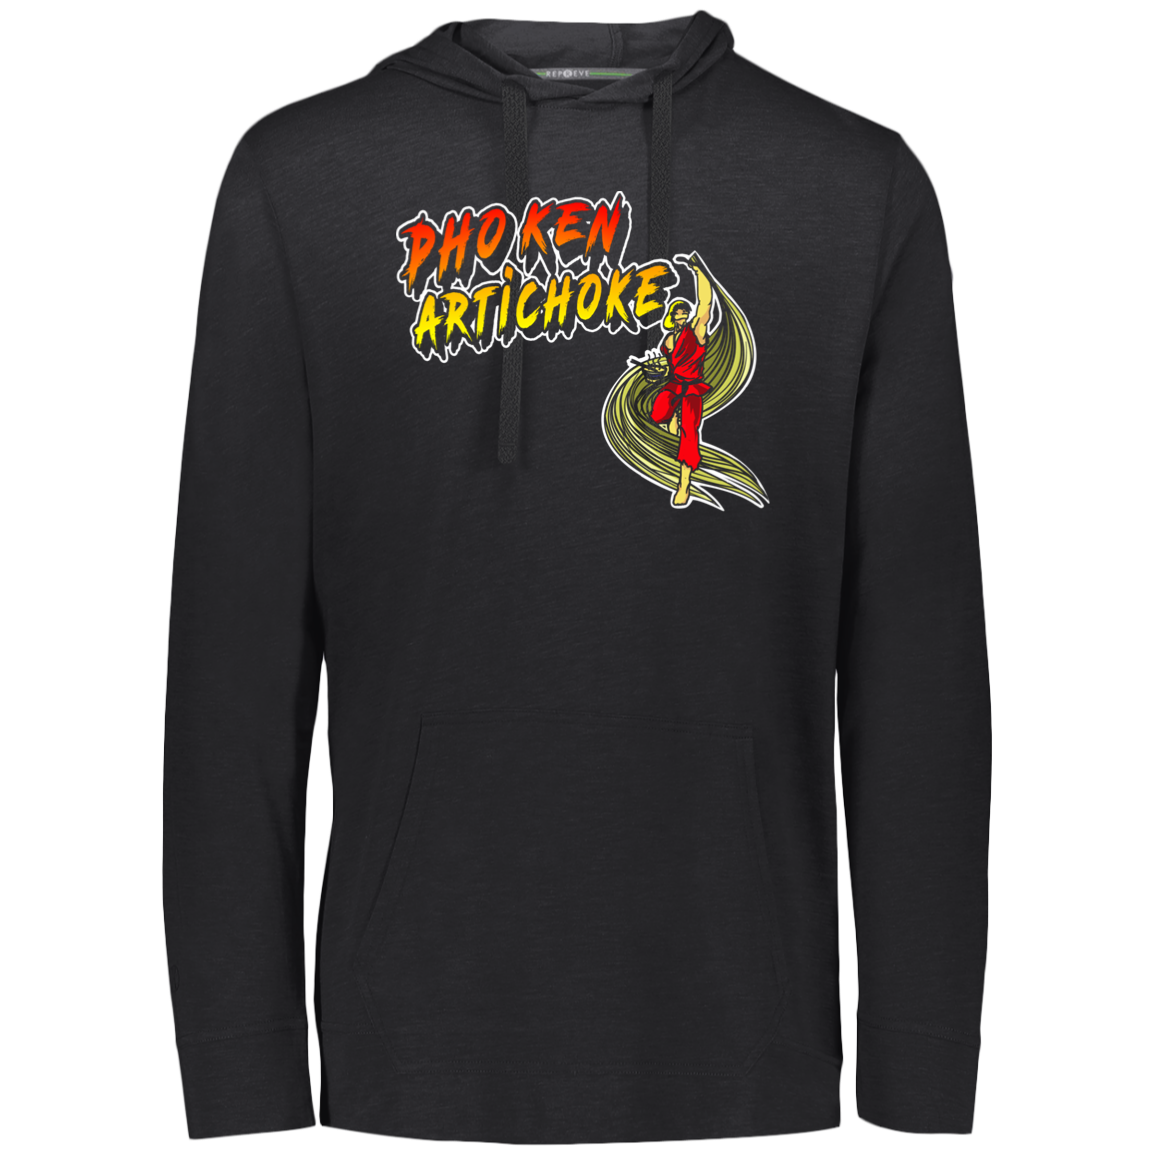 ArtichokeUSA Custom Design. Pho Ken Artichoke. Street Fighter Parody. Gaming. Eco Triblend T-Shirt Hoodie